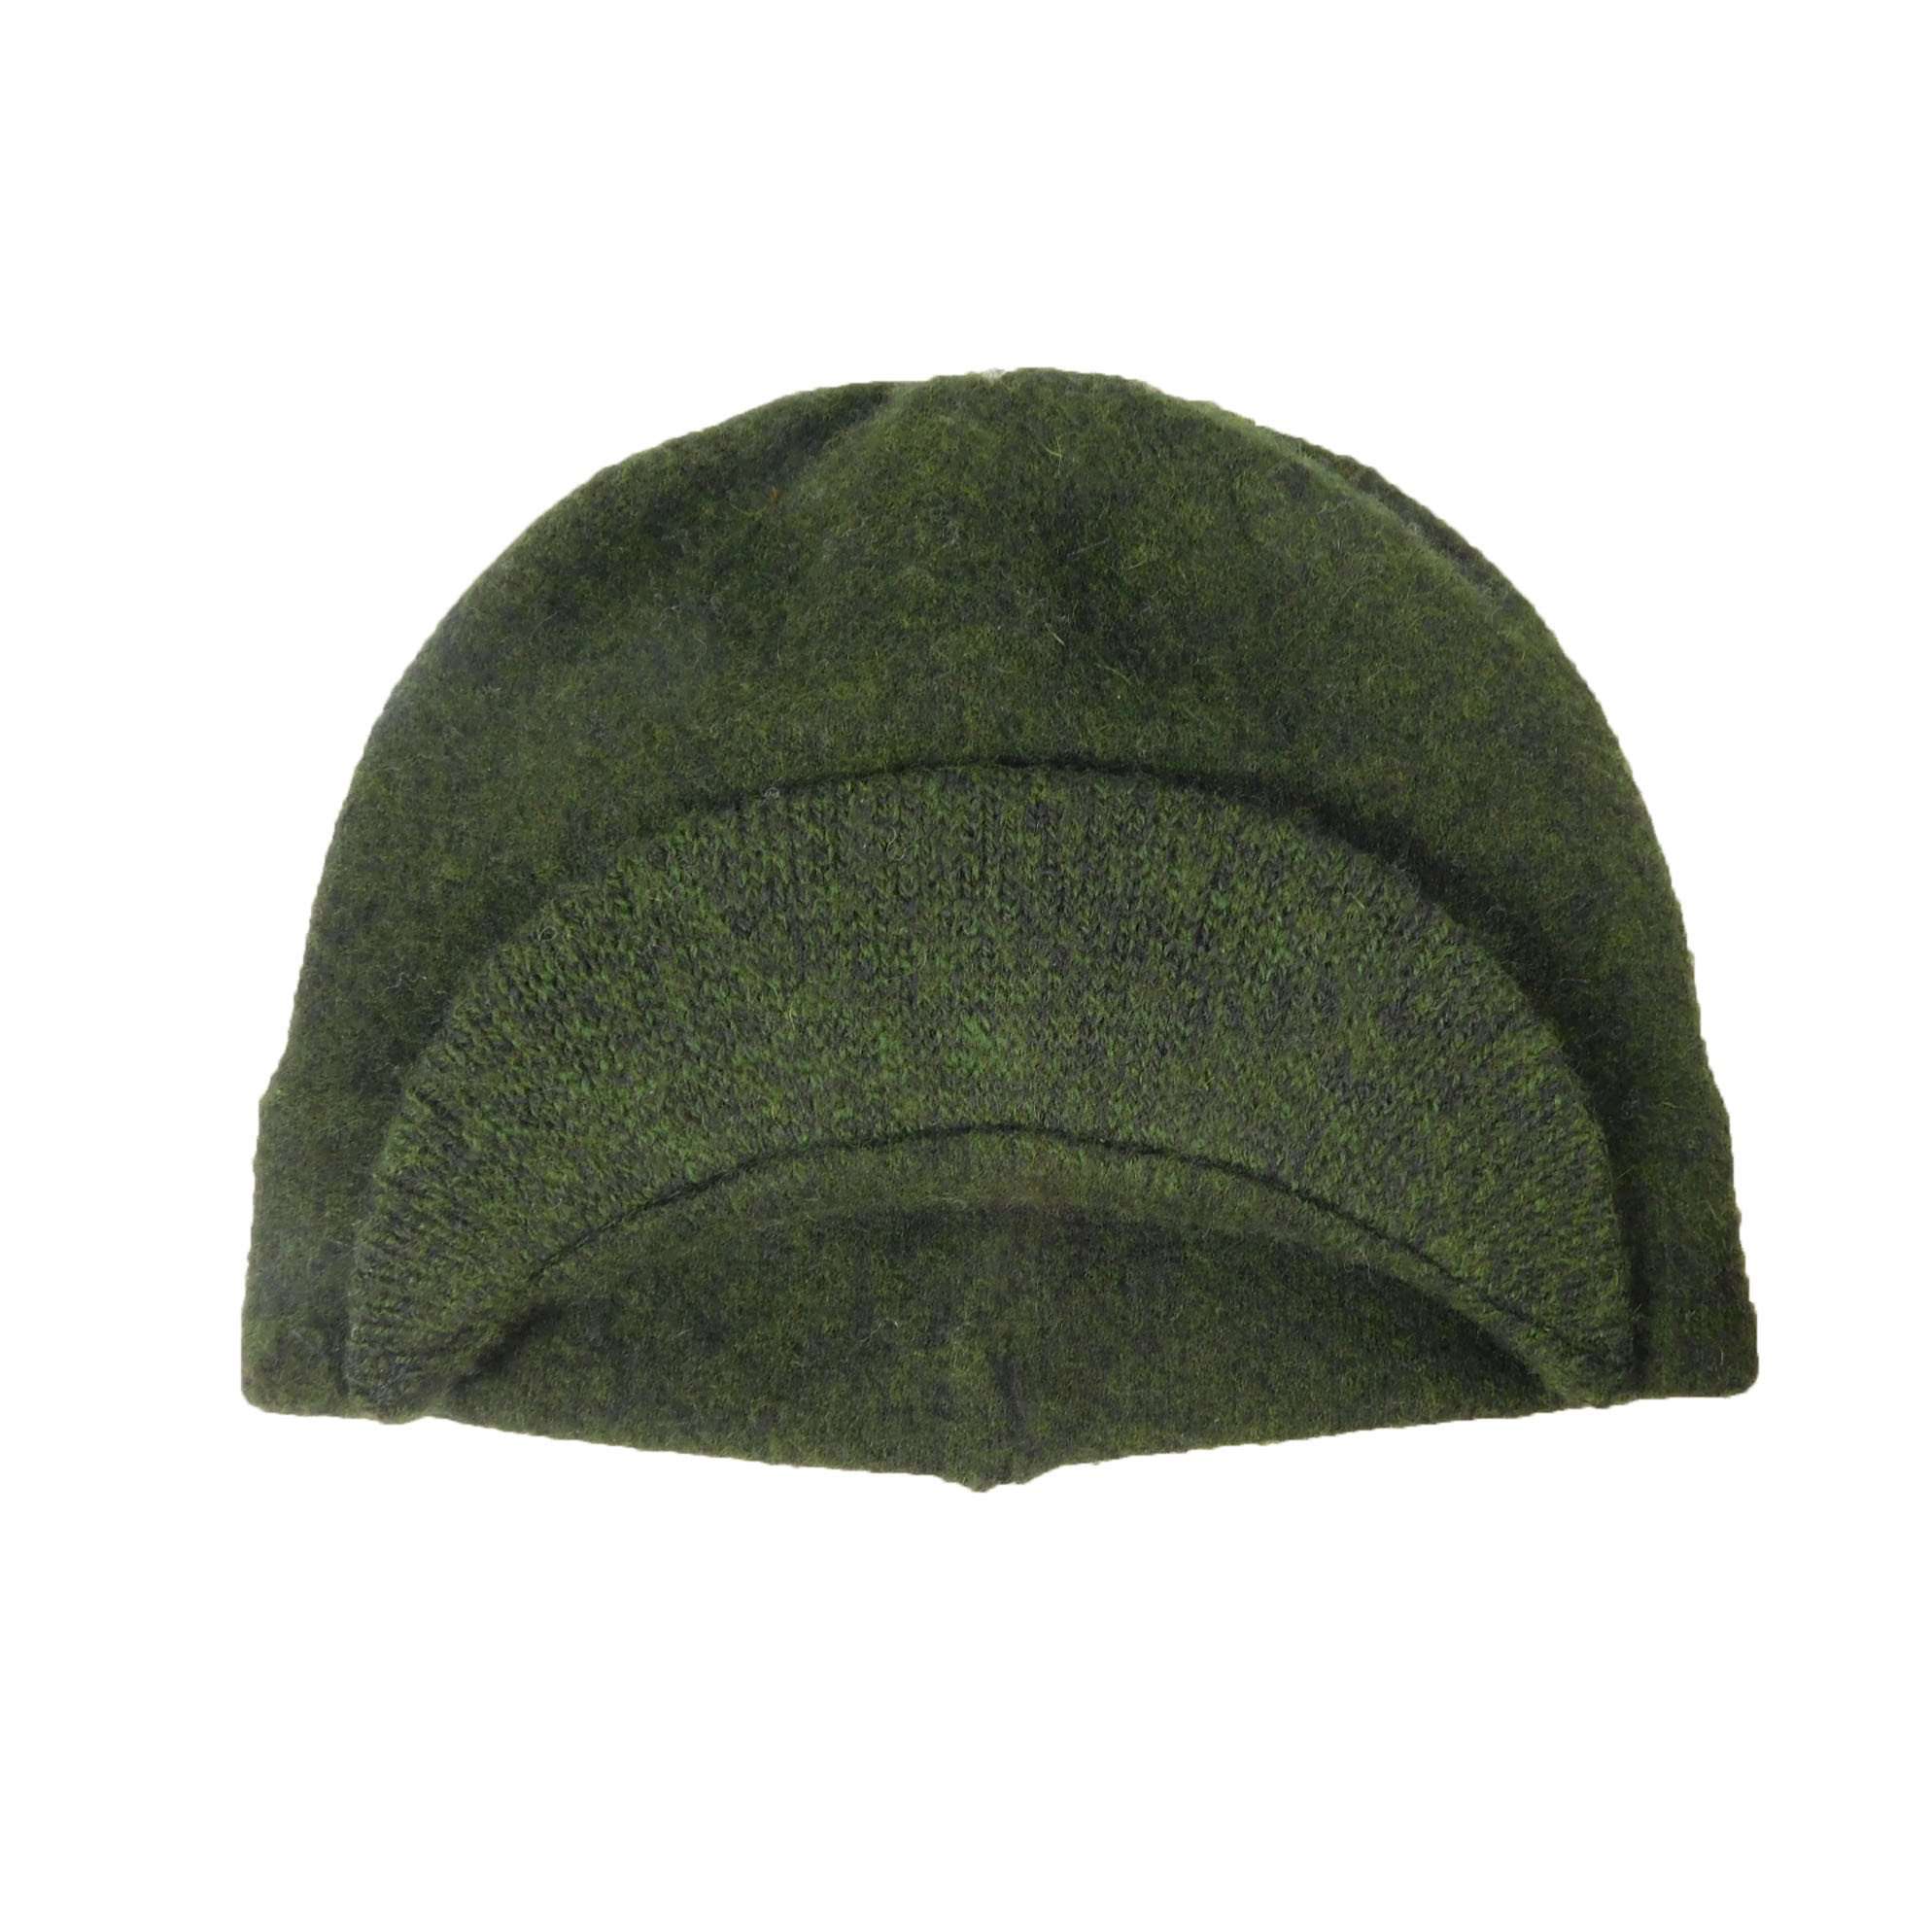 Wool Radar Beanie Beanie Dorfman Hat Co. MWWK950FG1 Forest green  